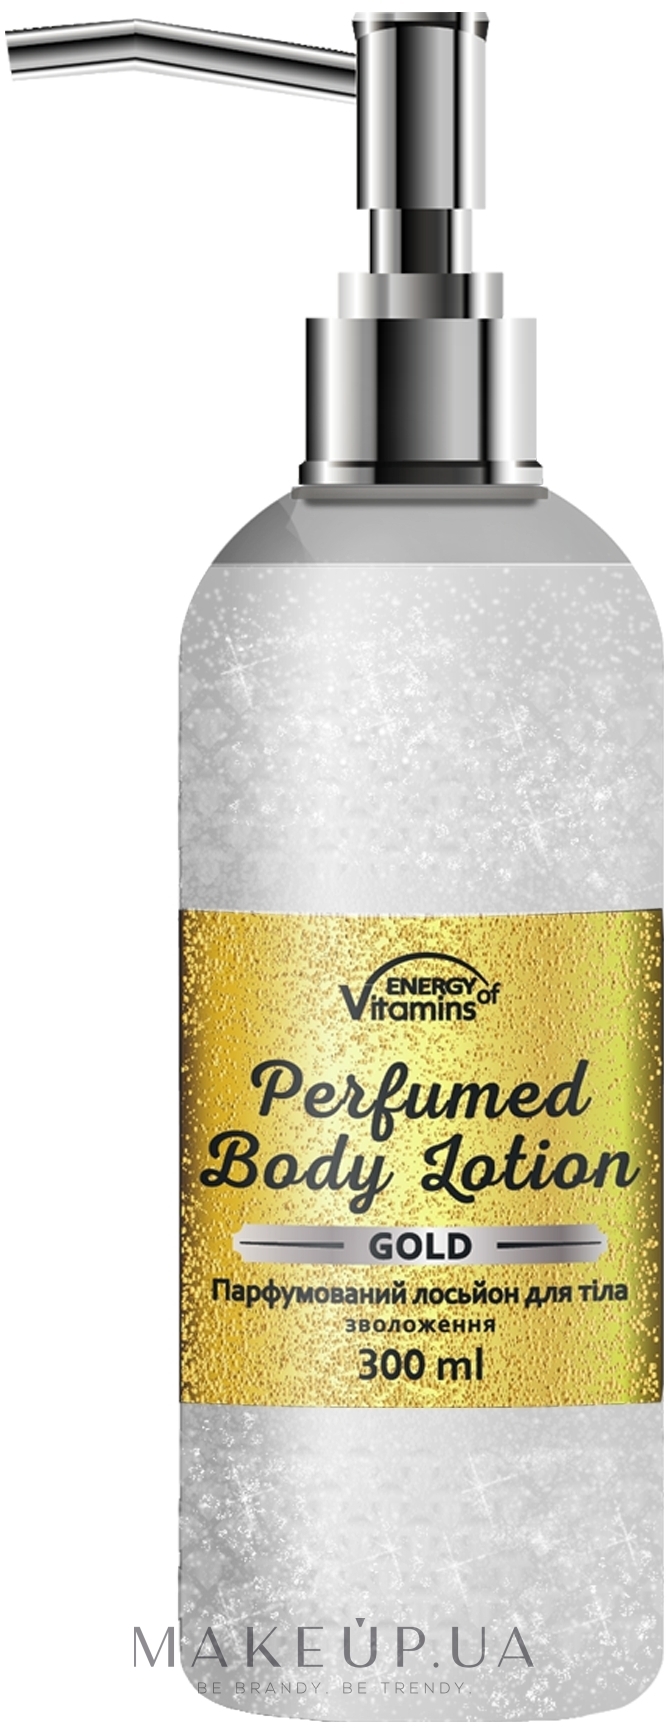 Парфюмированный лосьон для тела - Energy of Vitamins Perfumed Gold — фото 300ml